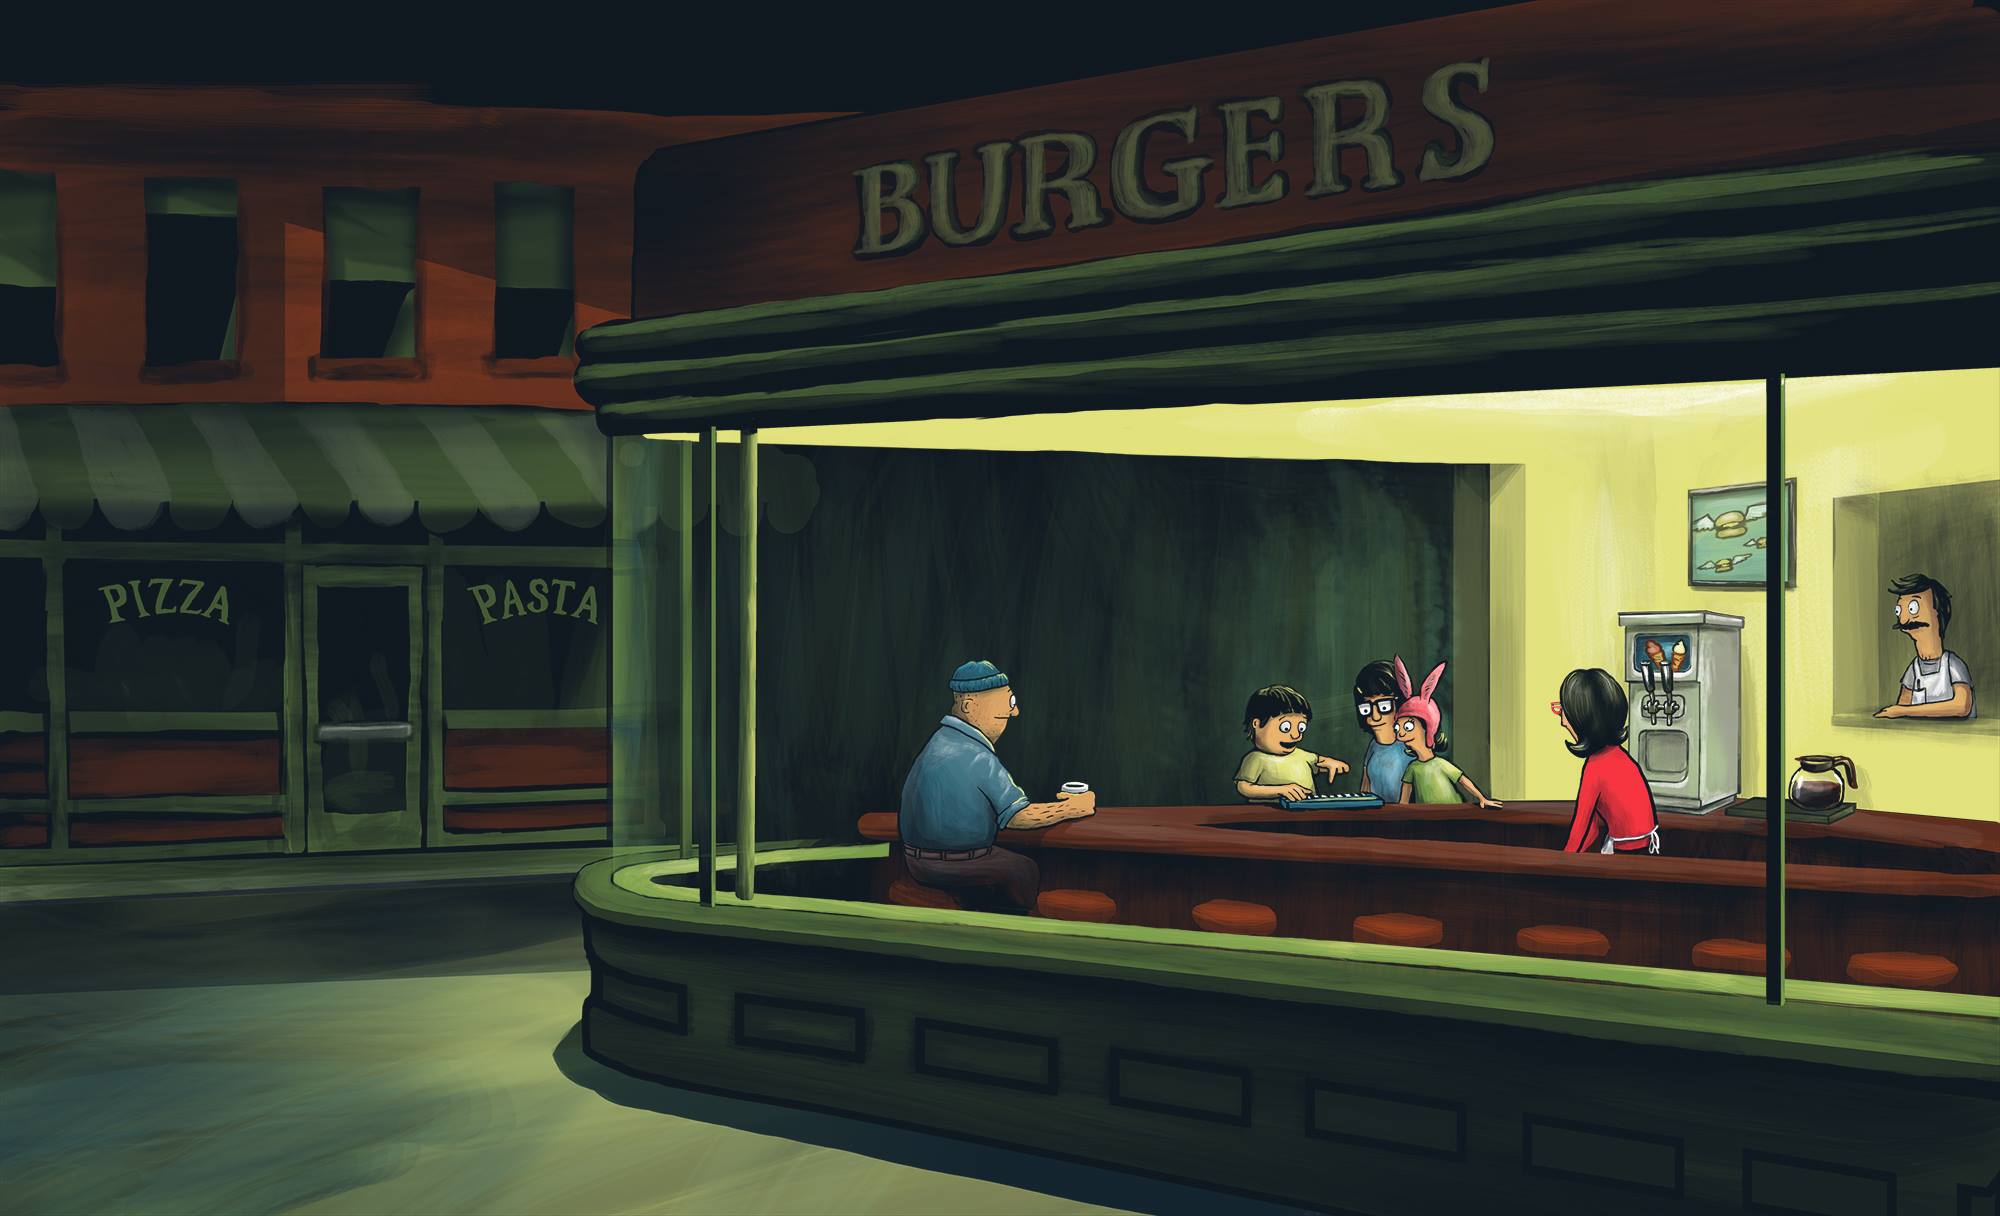 Humor Painting Bobs Burgers Burgers Restaurant 2000x1216